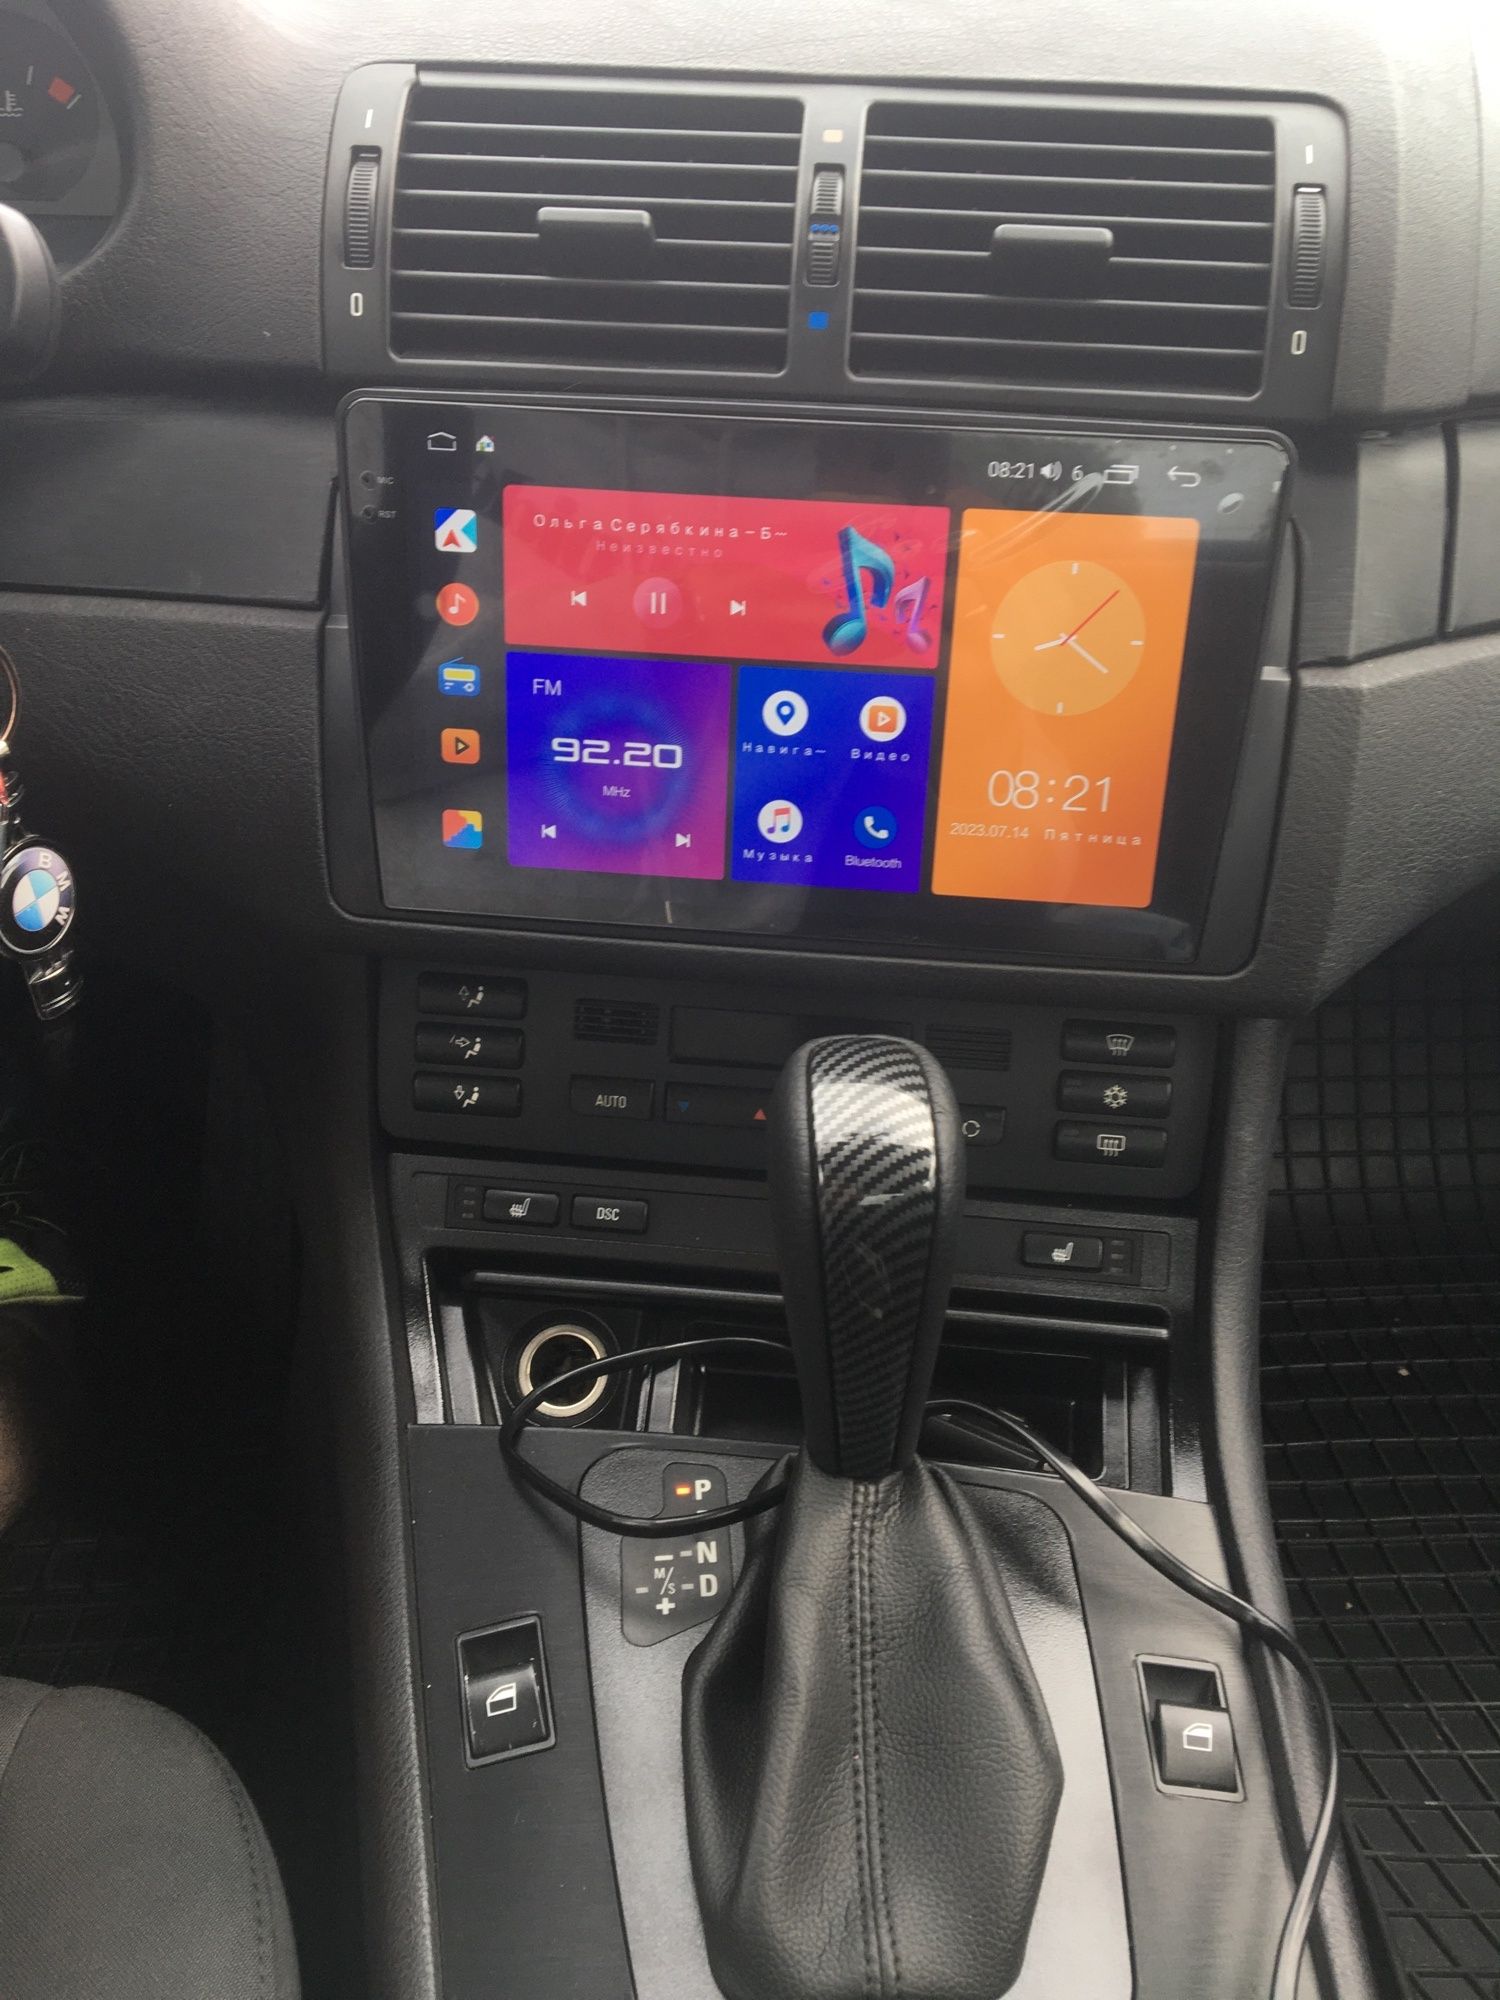 Автомагнитола BMW E46, rover 75, на android , gps, wifi+android market